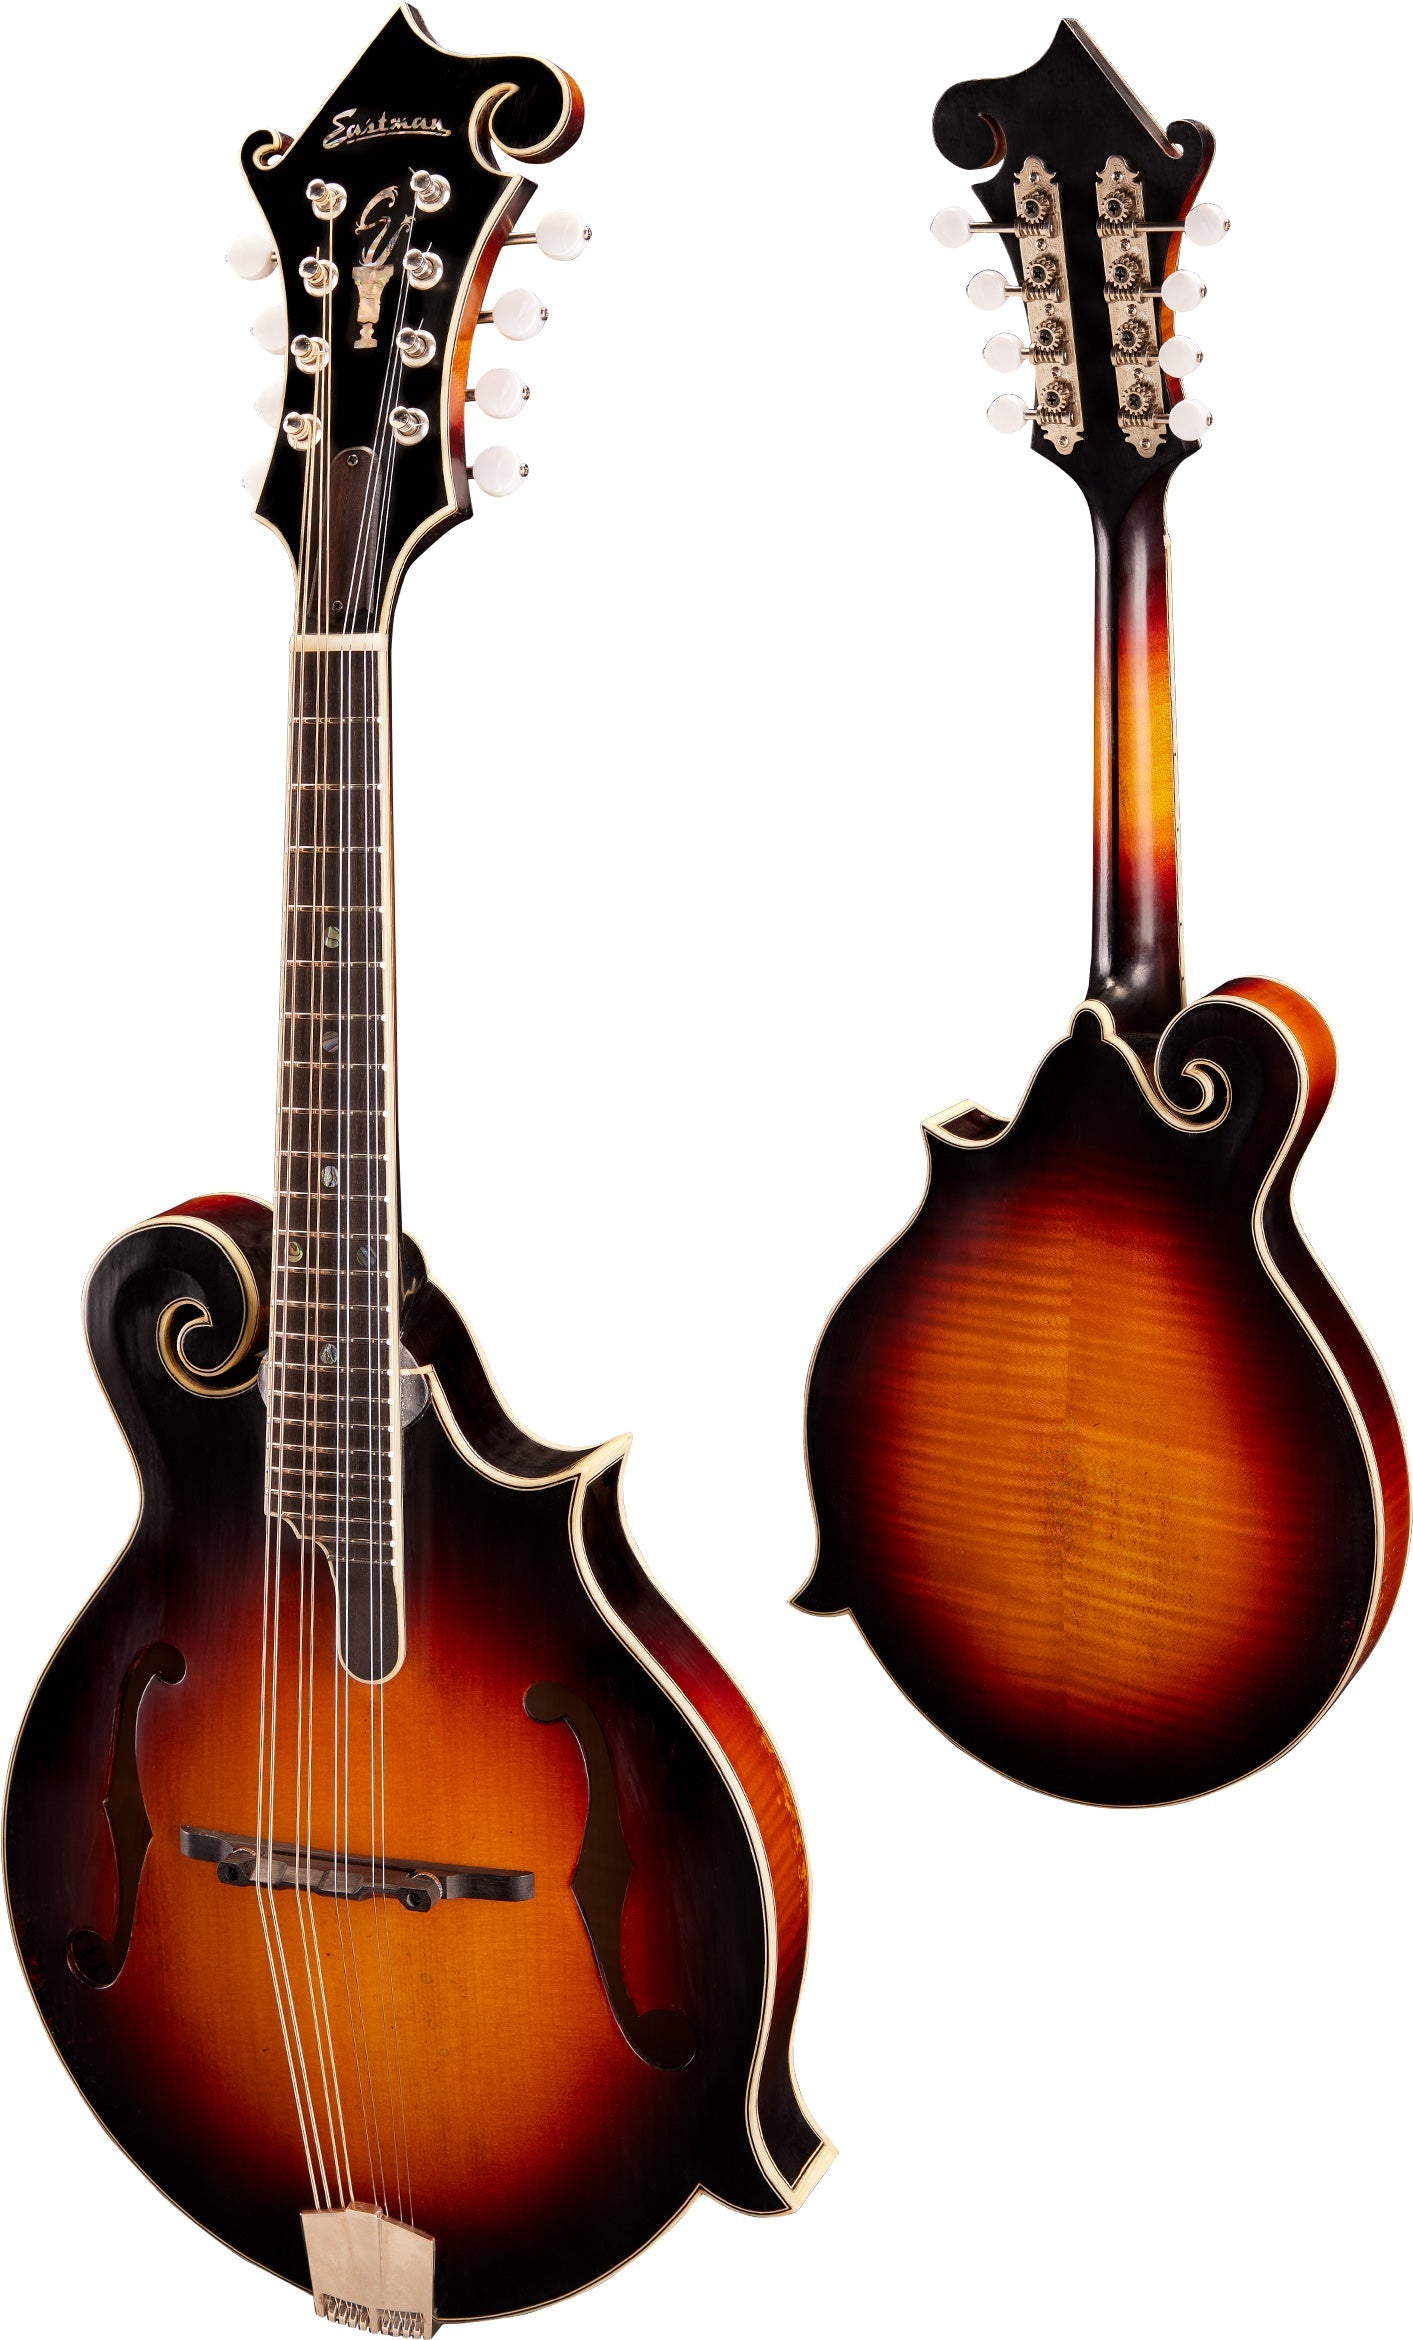 Eastman MD815/v Antique Sunburst Mandolin (F-style F-holes, Solid Spruce top, Solid Maple back and sides, w/Case), Mandolin for sale at Richards Guitars.